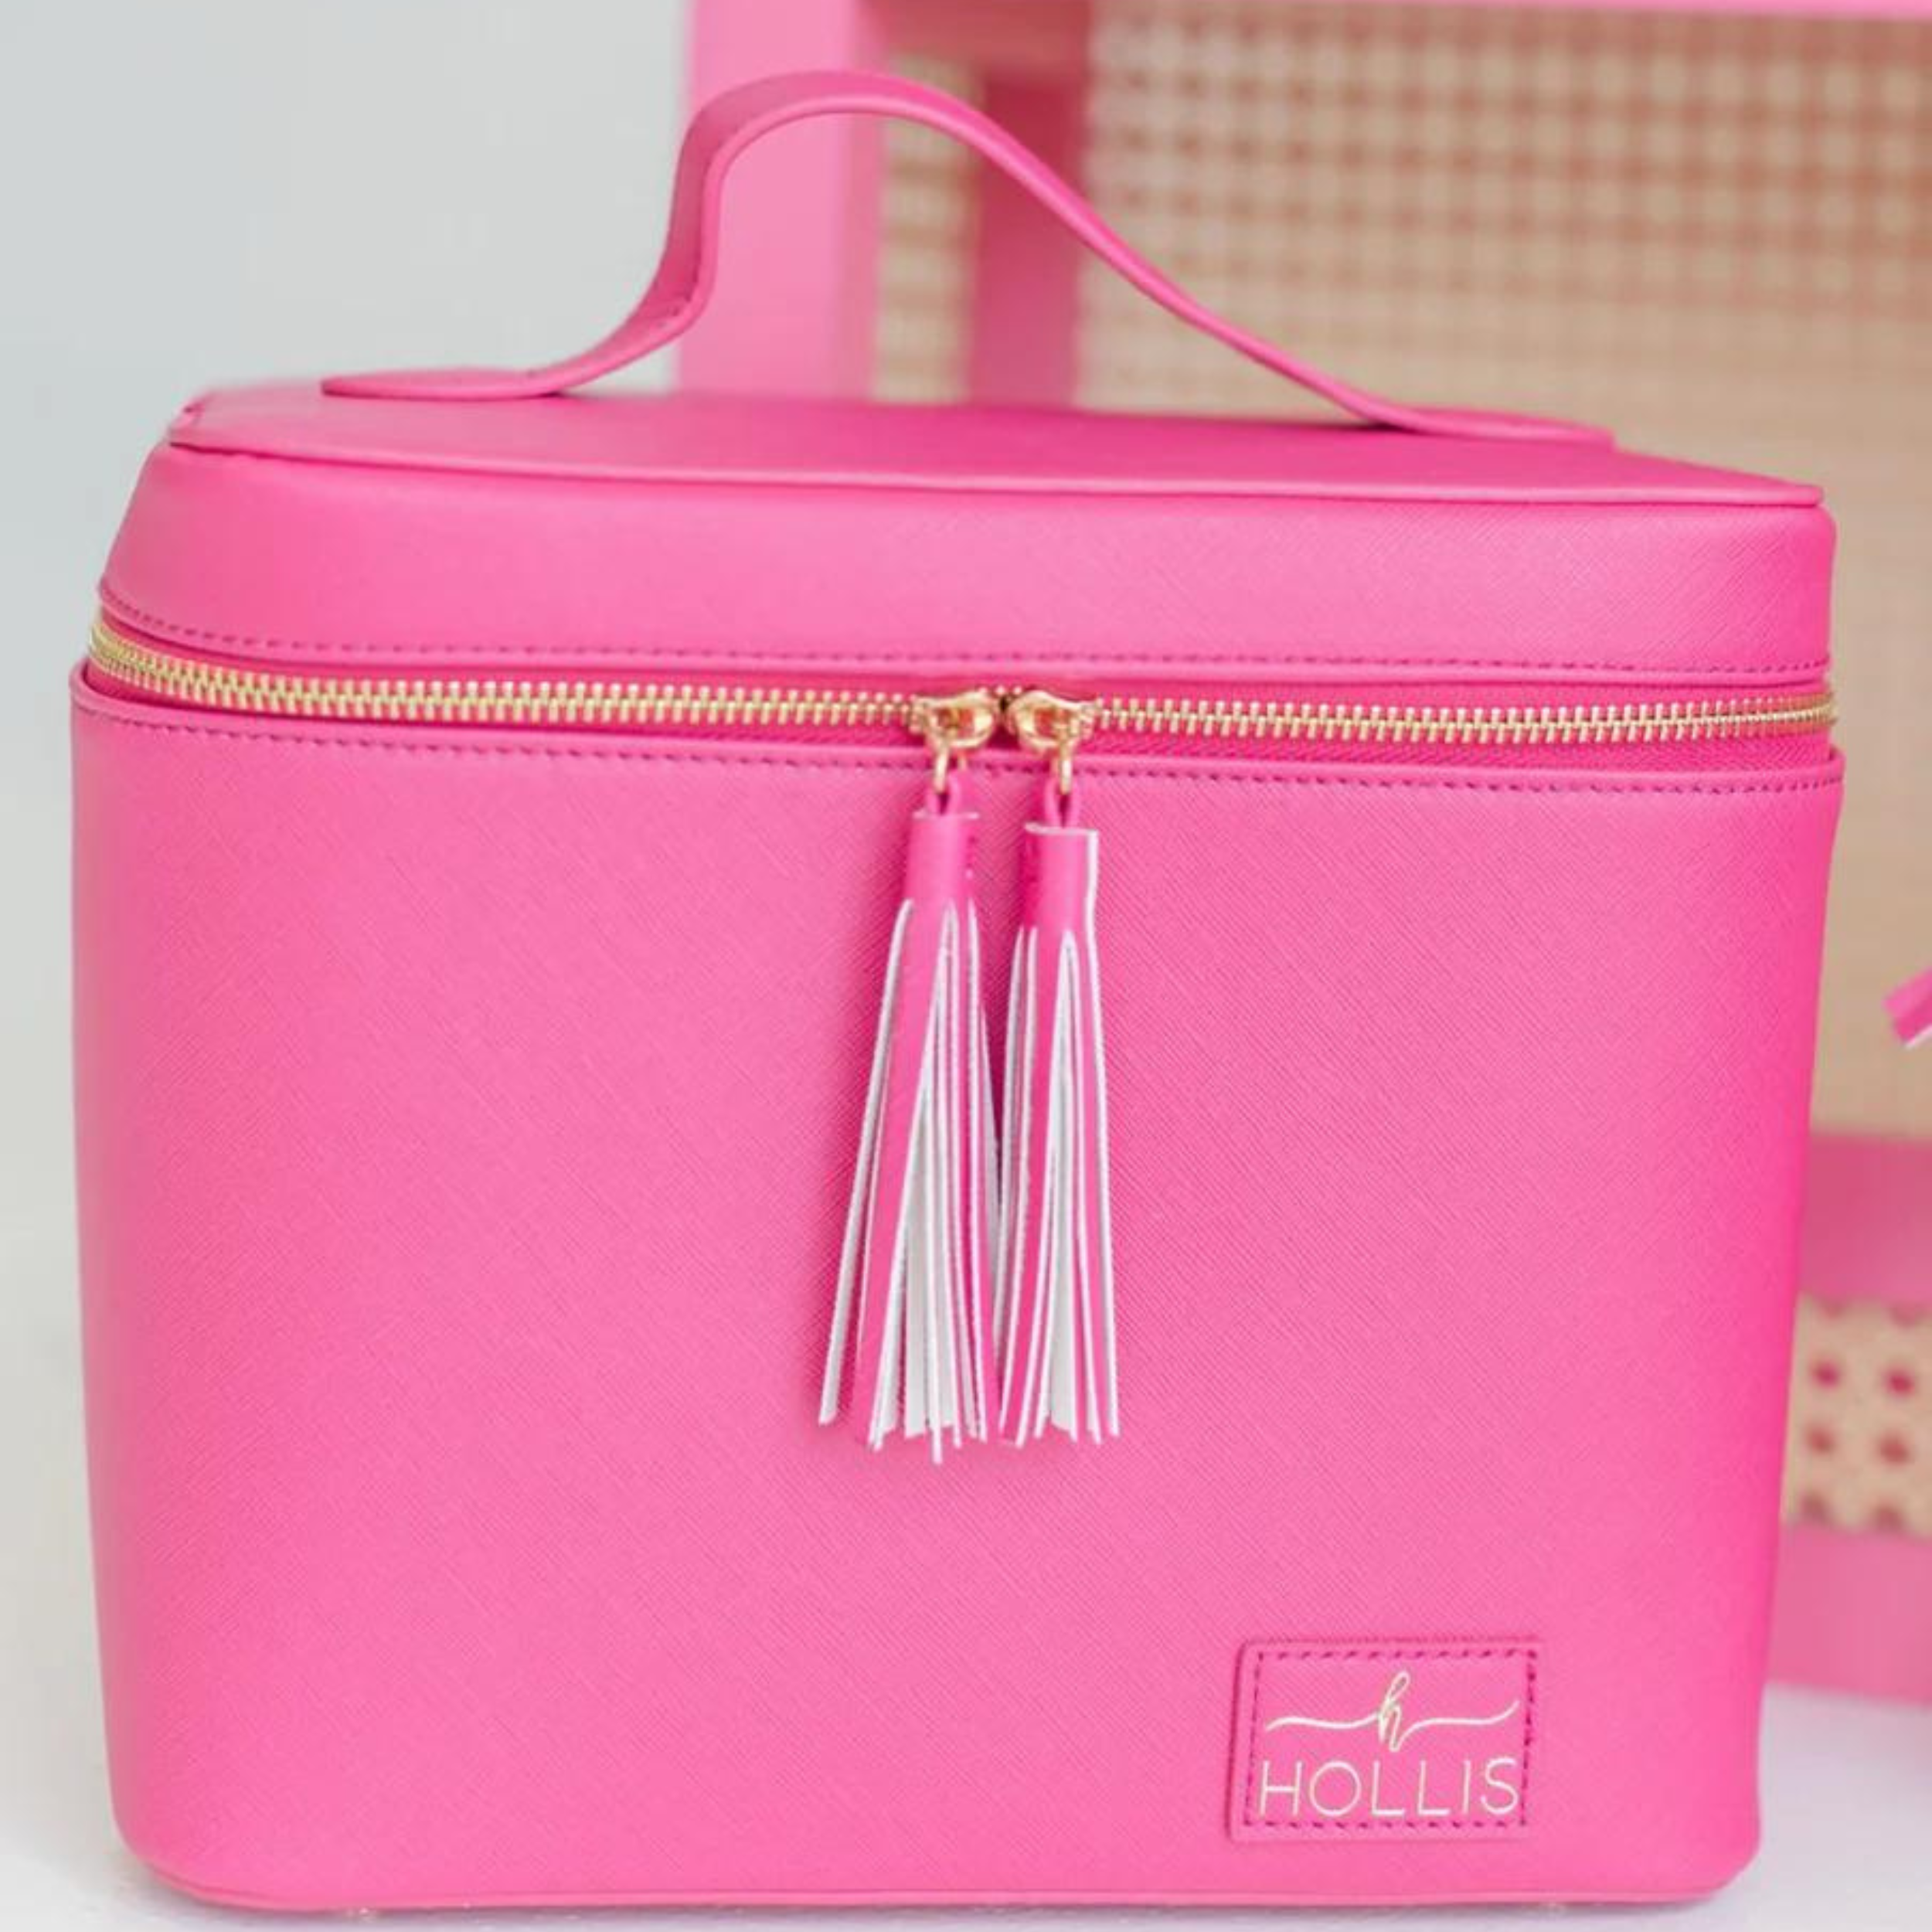 Hollis | Lux Bag in Hot Pink